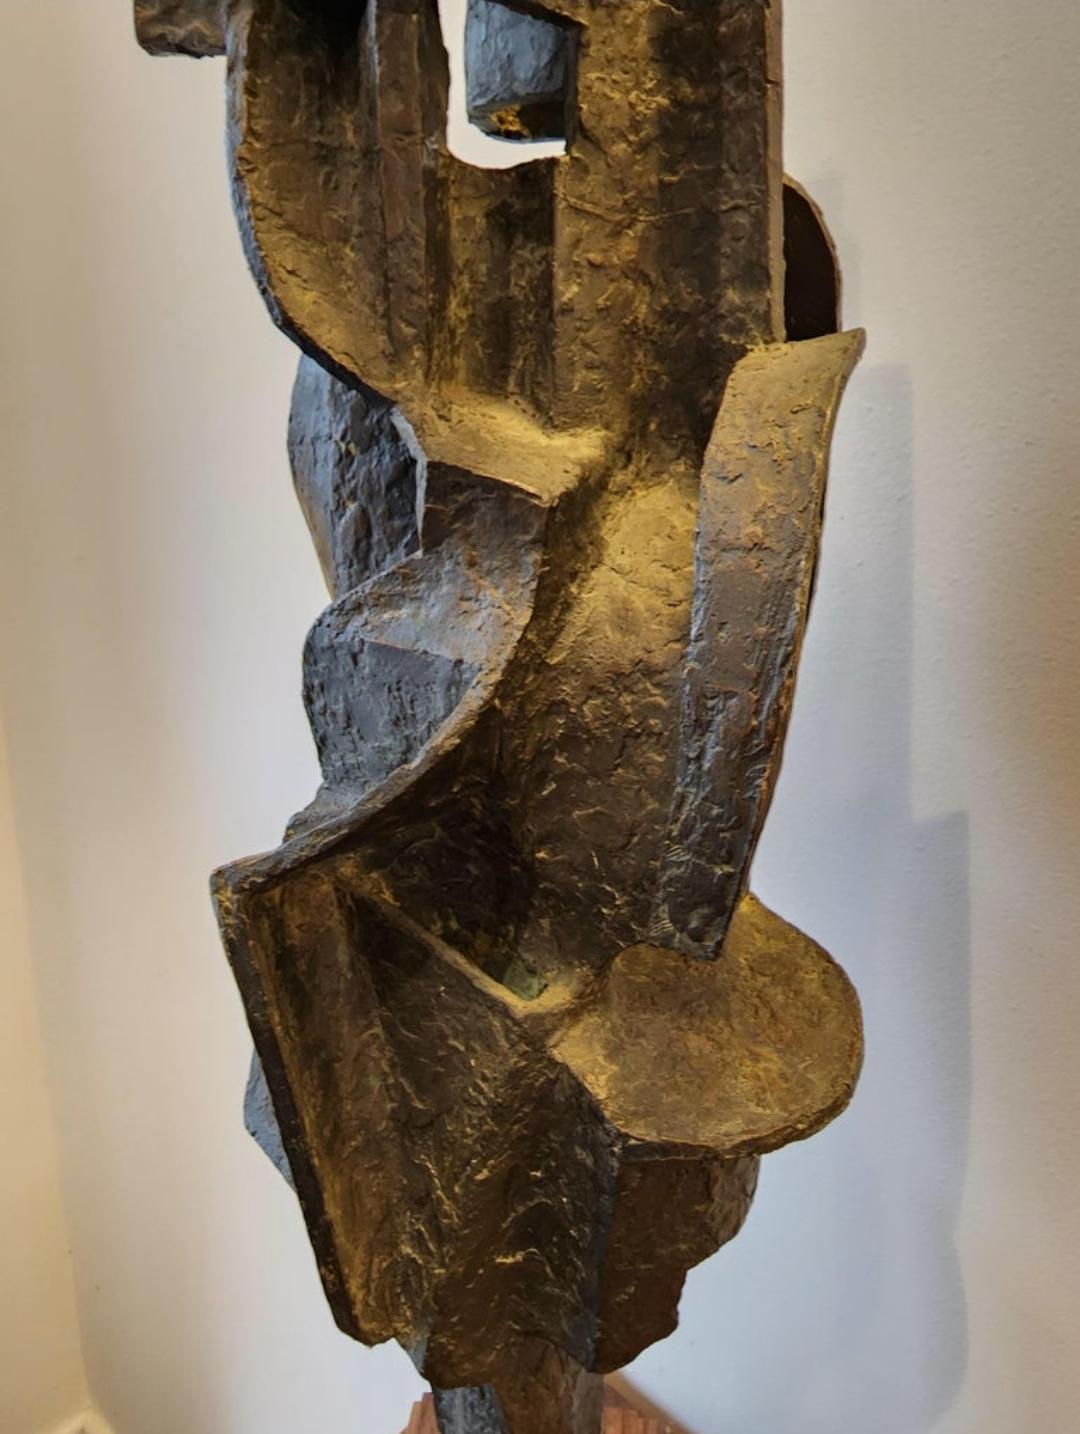  Sculpture abstraite en bronze américaine de Gerald DiGiusto, 1958 1